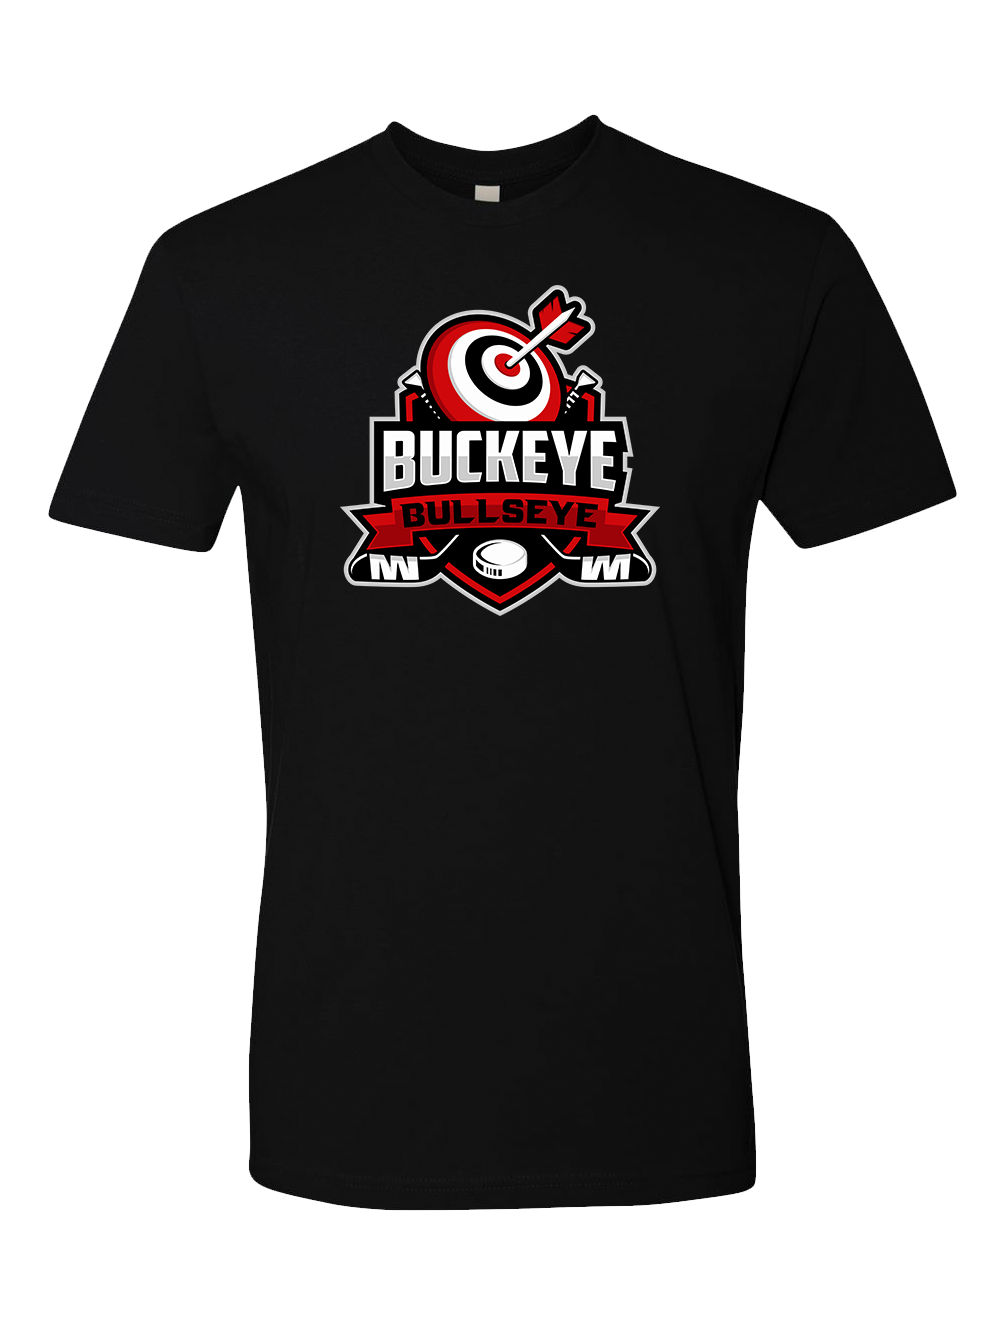 Buckeye Bullseye T-Shirt